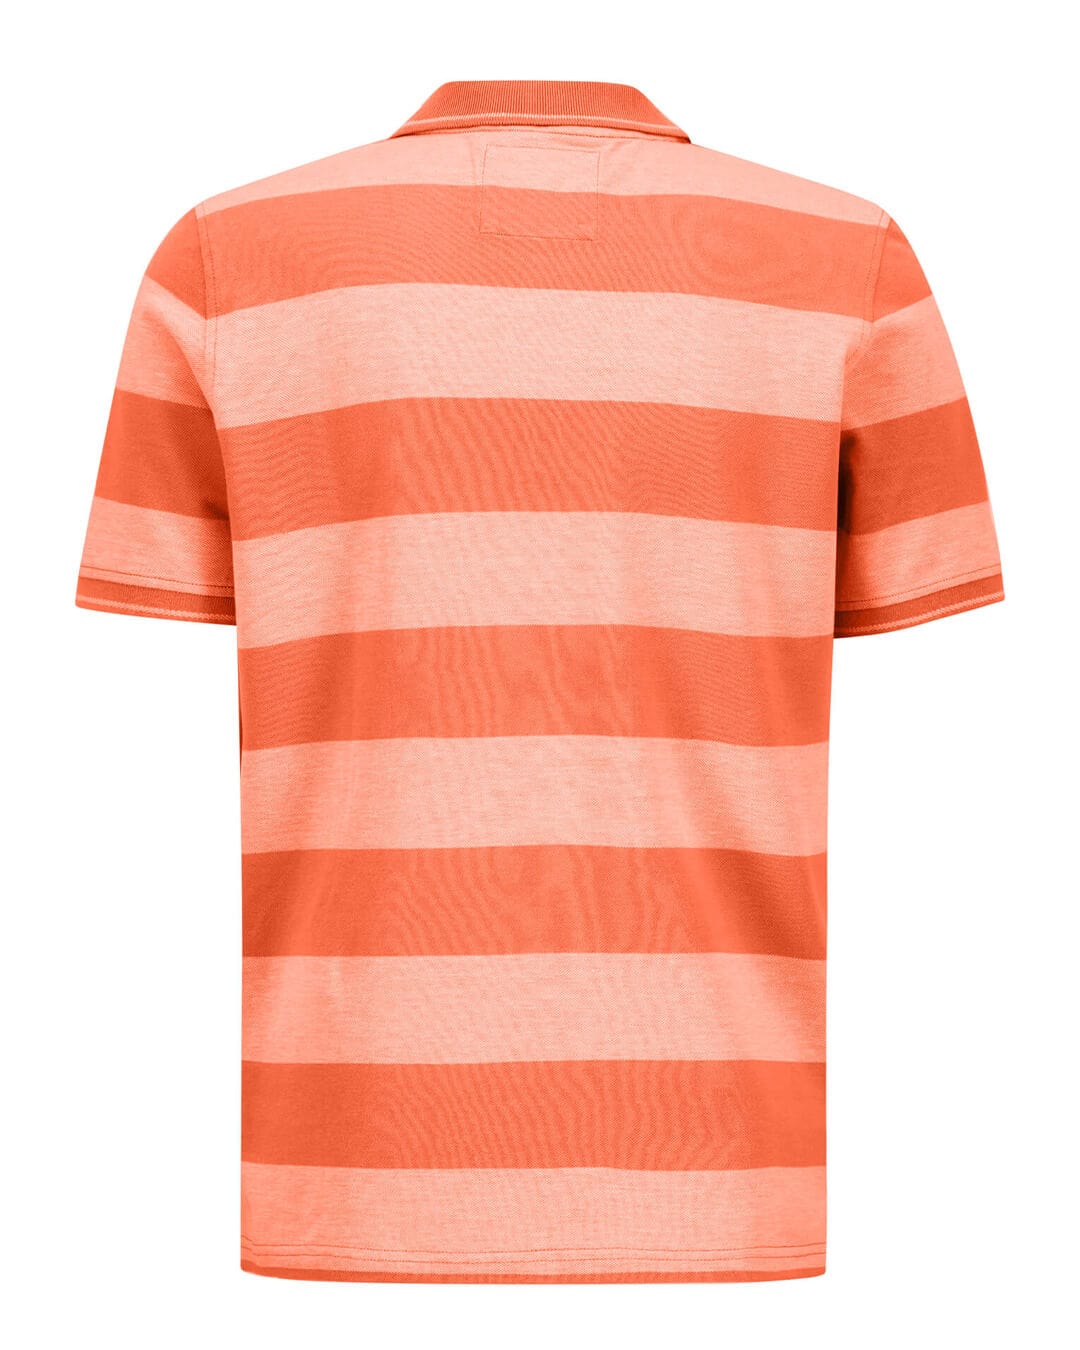 Fynch-Hatton Polo Shirts Fynch-Hatton Orange Two Tone Striped Polo Shirt